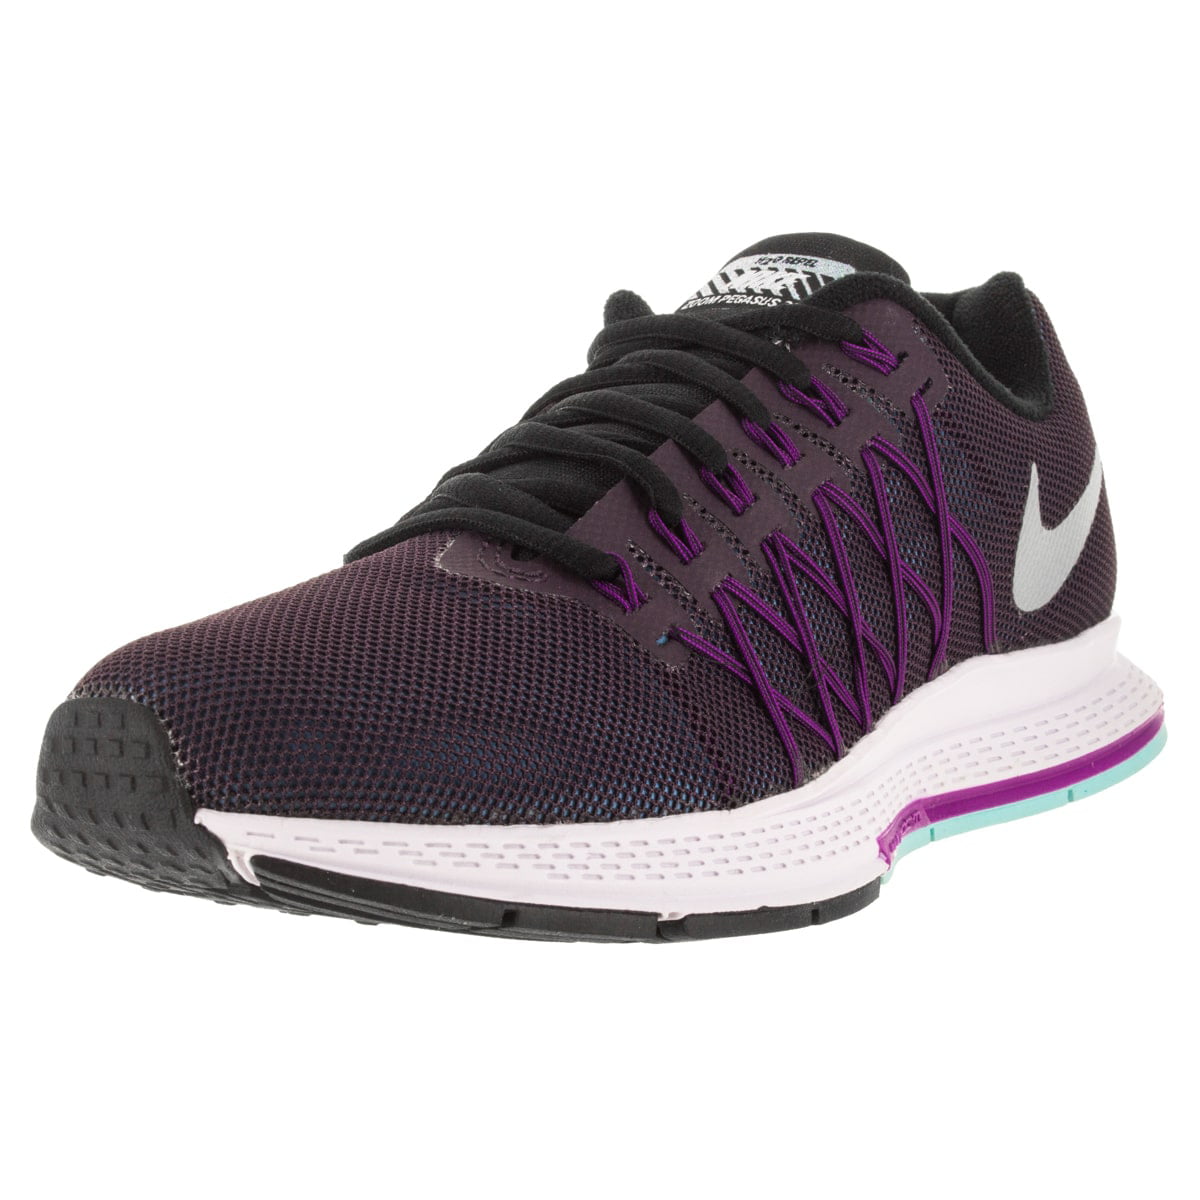 Nike Women's Air Zoom Pegasus 32 Flash Nbl Purple/Rflct Slvr/Vvd Purple Running Shoe -